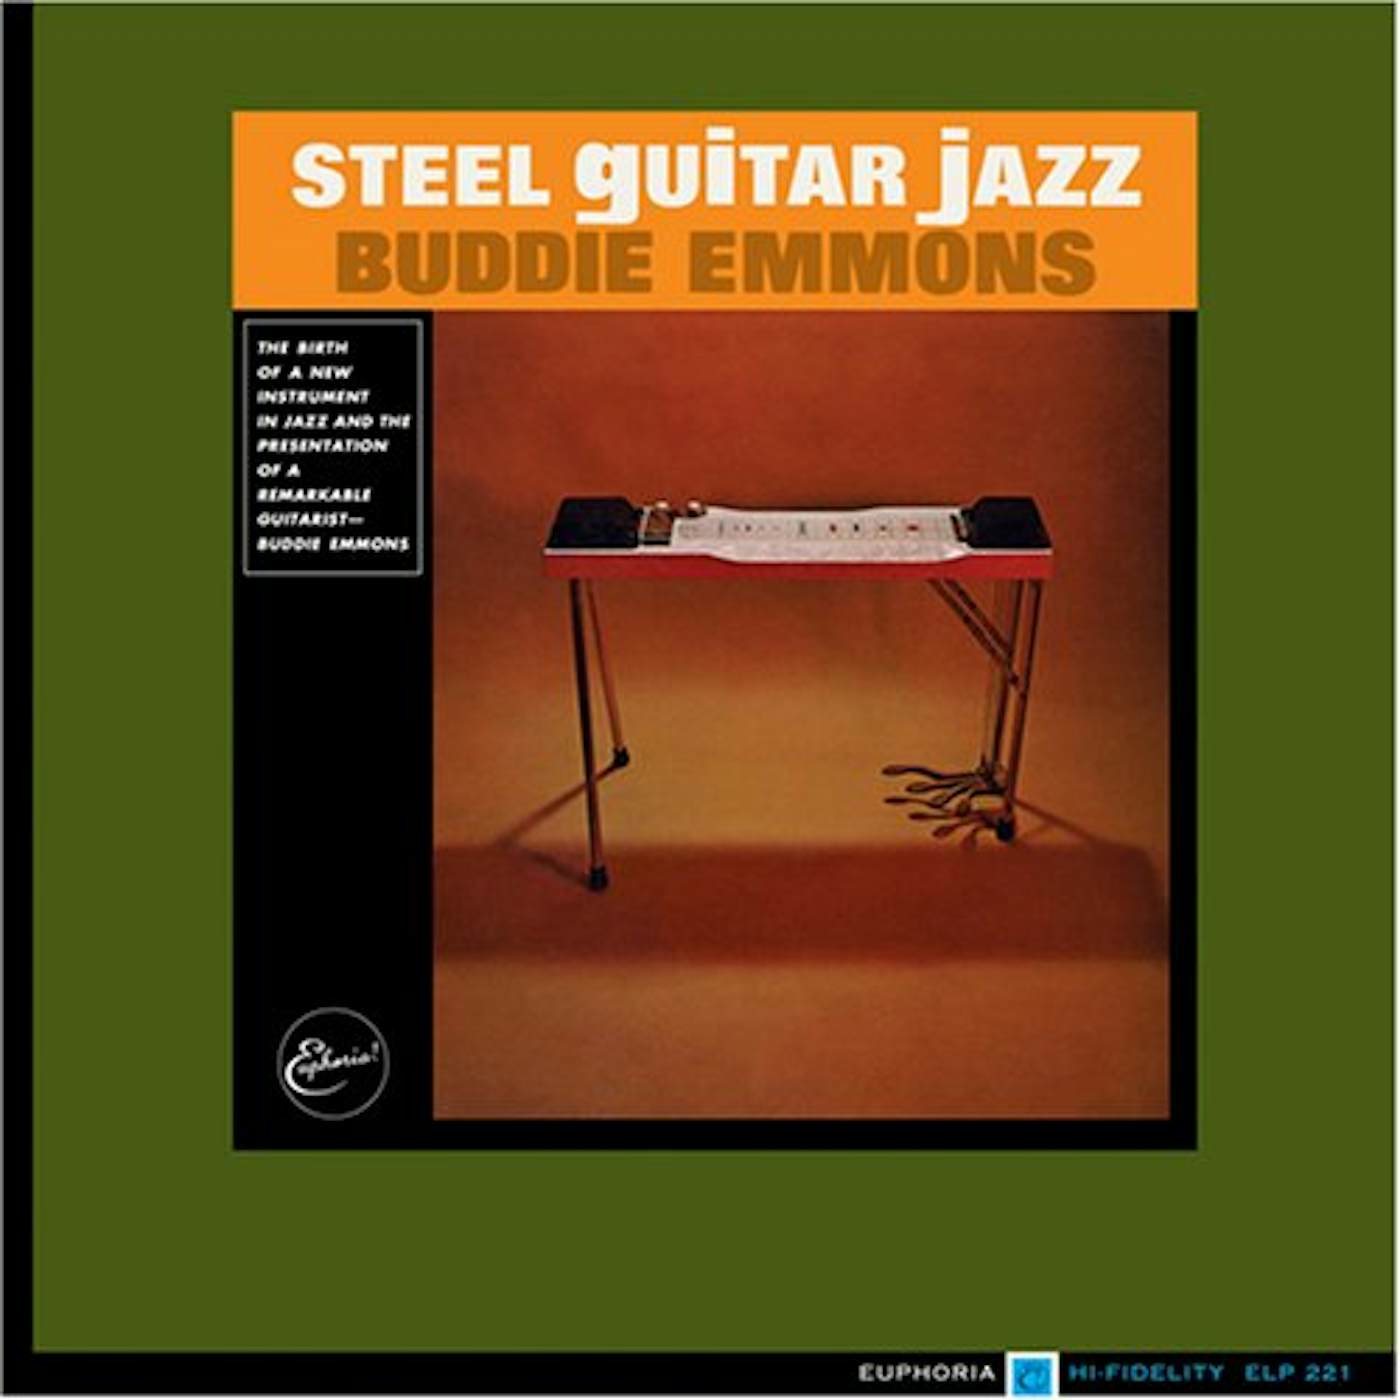 Buddy Emmons Steel Guitar Jazz Vinyl Record